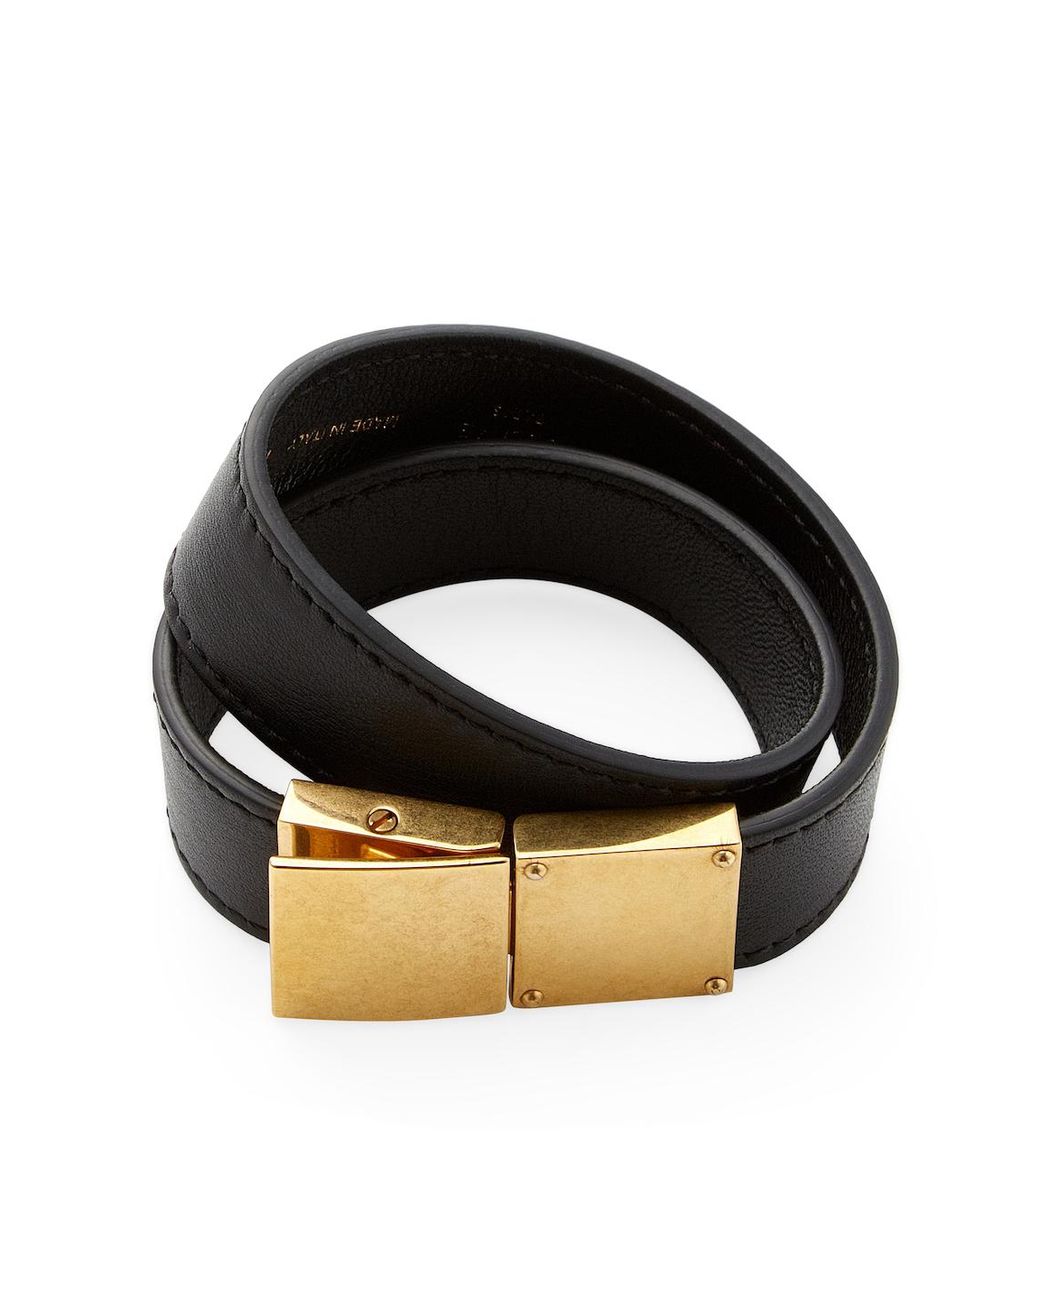 Celine Classic Double Strap Leather Bracelet in Black | Lyst